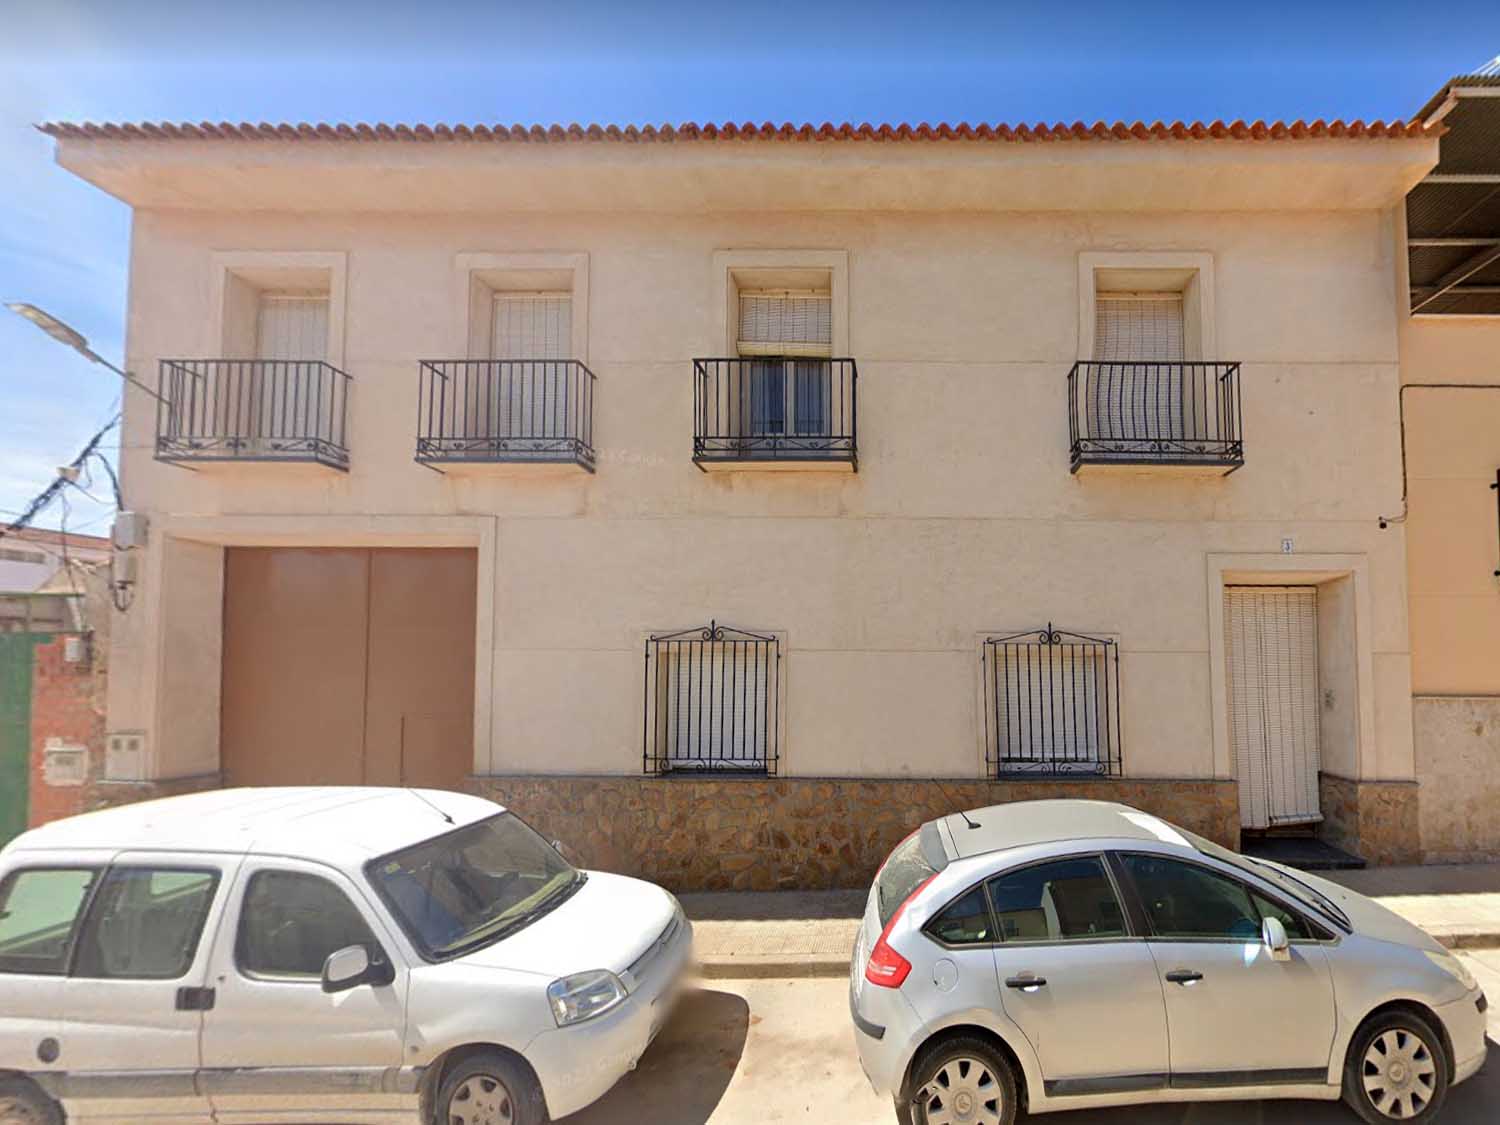 Undivided half (50%) of the plot with House in Calle García Lorca de Campo de Criptana (Ciudad Real). FR 34557 RP Alcazar de San Juan No. 2.